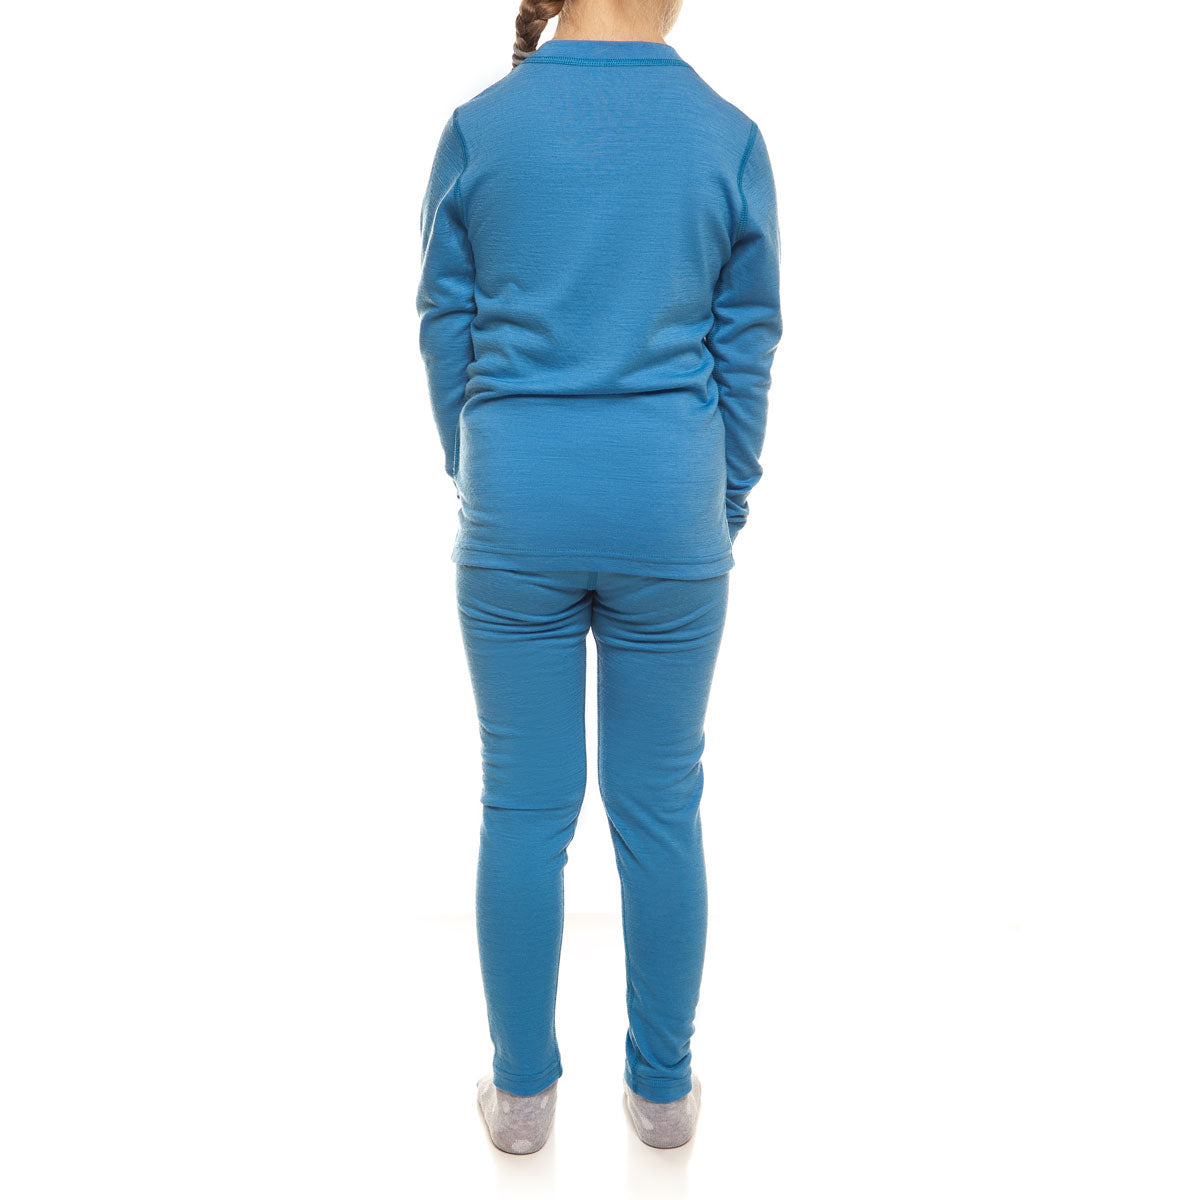 MENIQUE Long Sleeve & Bottom 2-Piece Light Blue